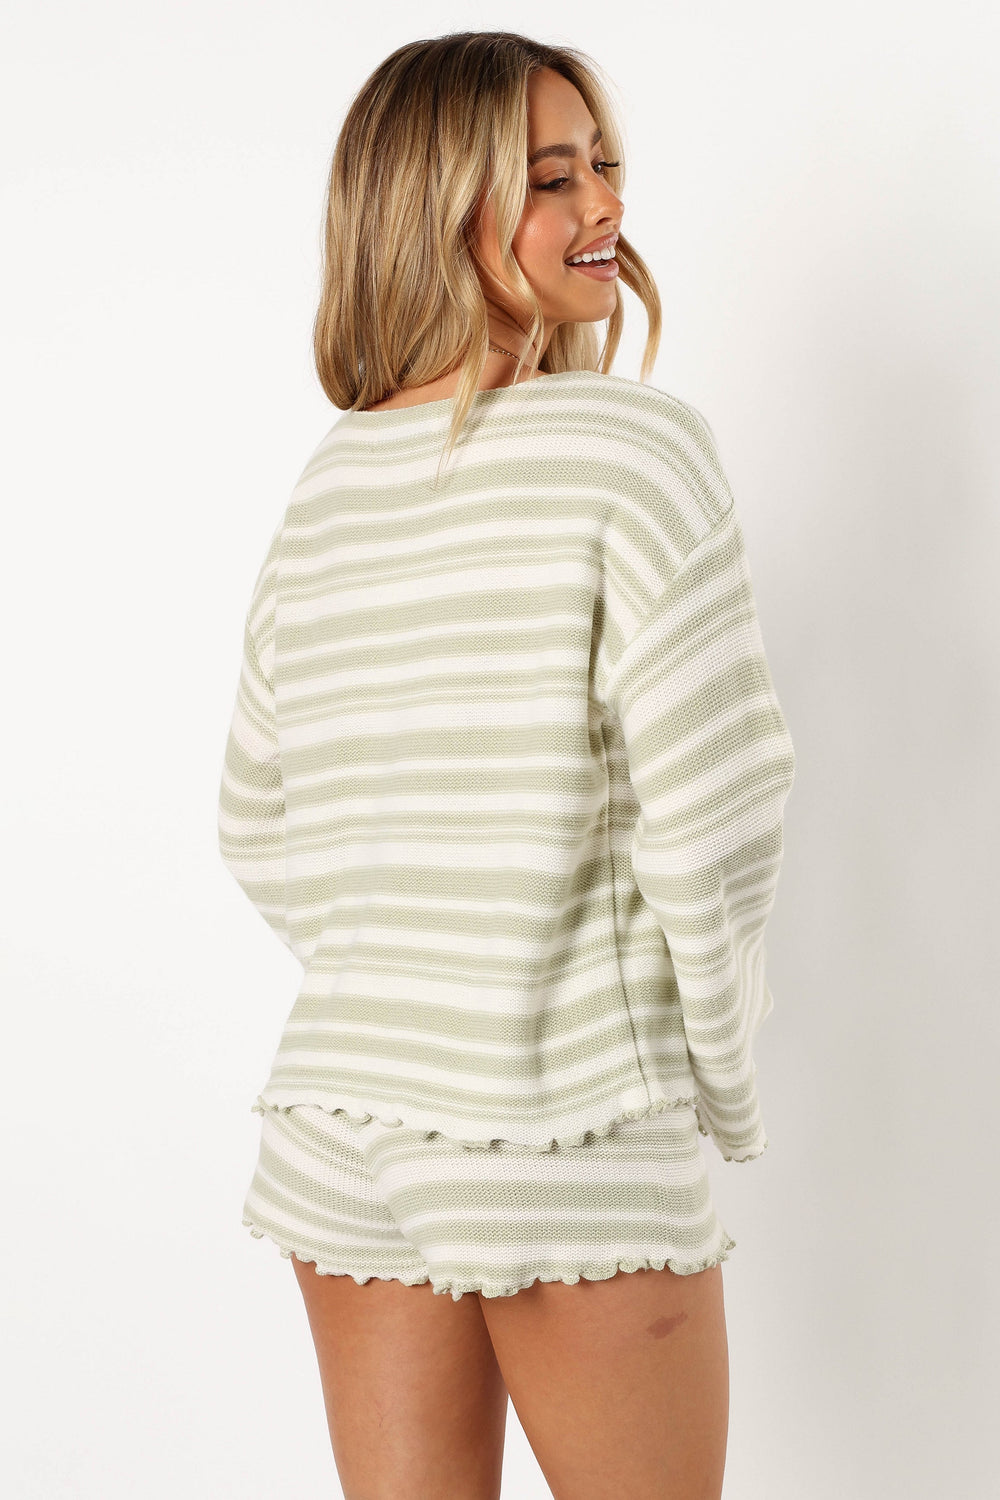 SETS @Christina Knit Set - Sage Stripe